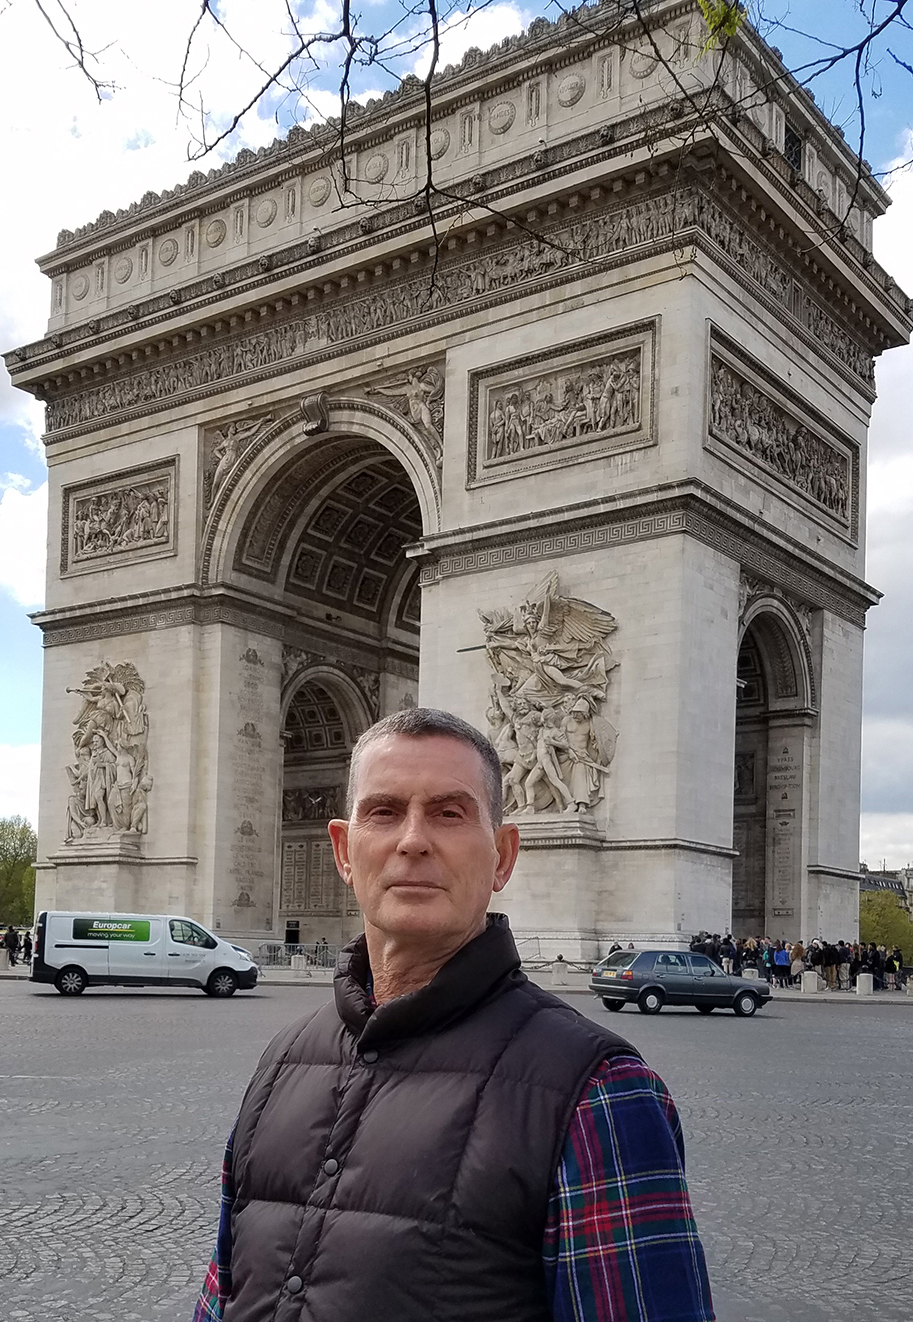 Will at the Arc de triomphe